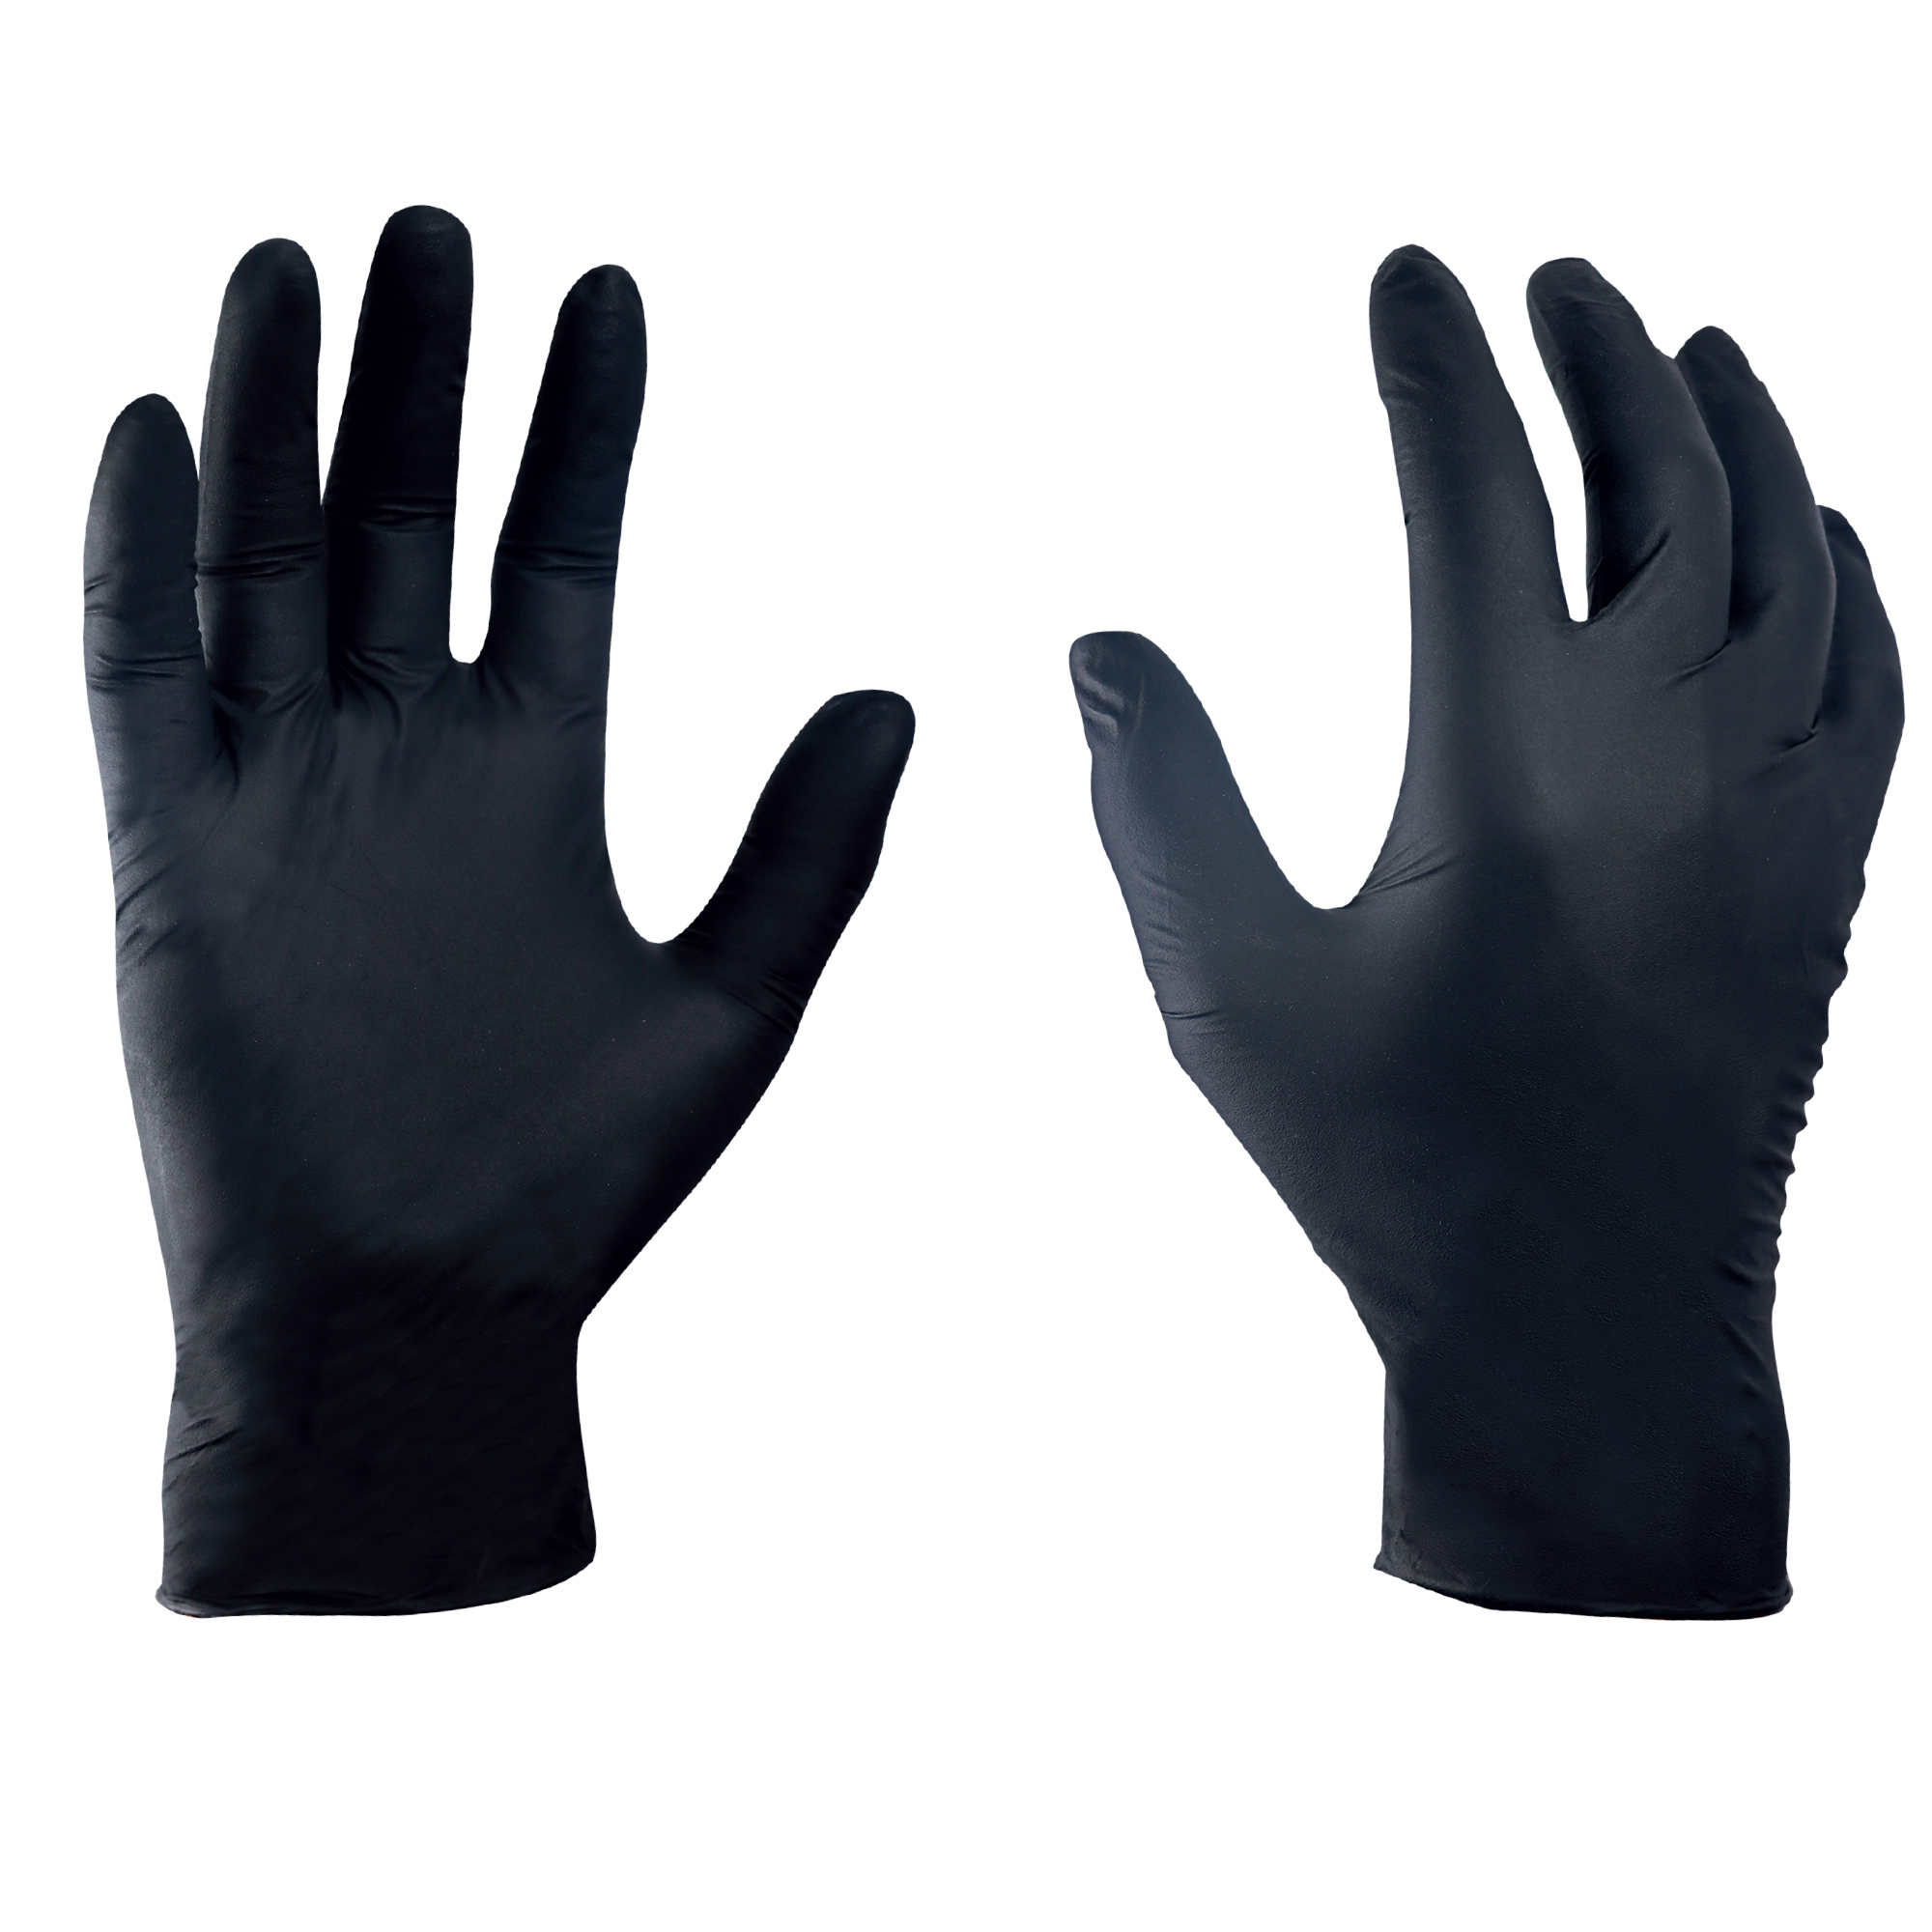 General Electric, 4mil Nitrile Black Medium Gloves 100pk, Size M, Color Black, Included (qty.) 100 Model GG601M